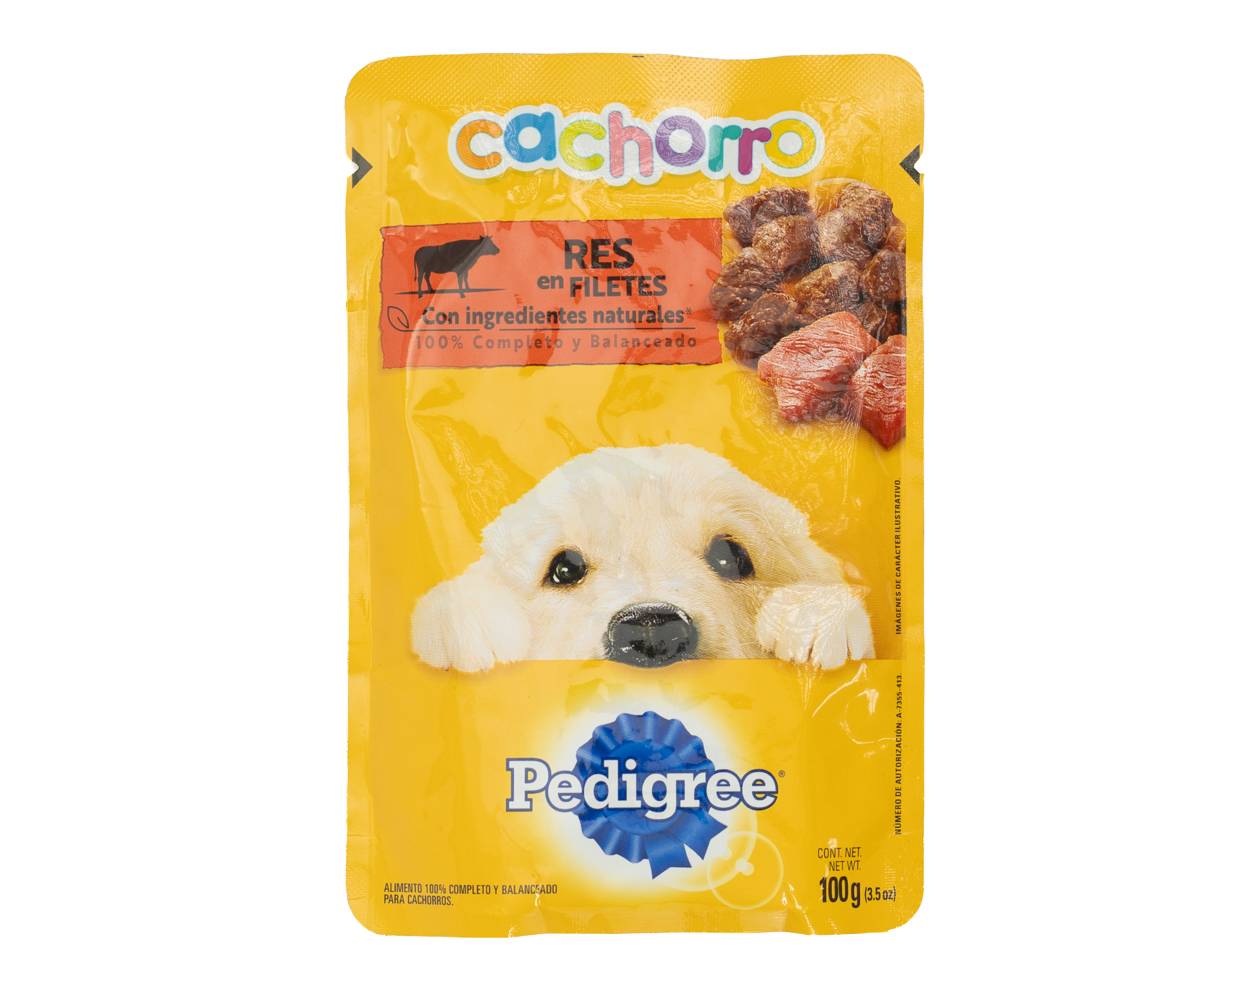 Pedigree alimento cachorro res en filetes (bolsa 100 g)